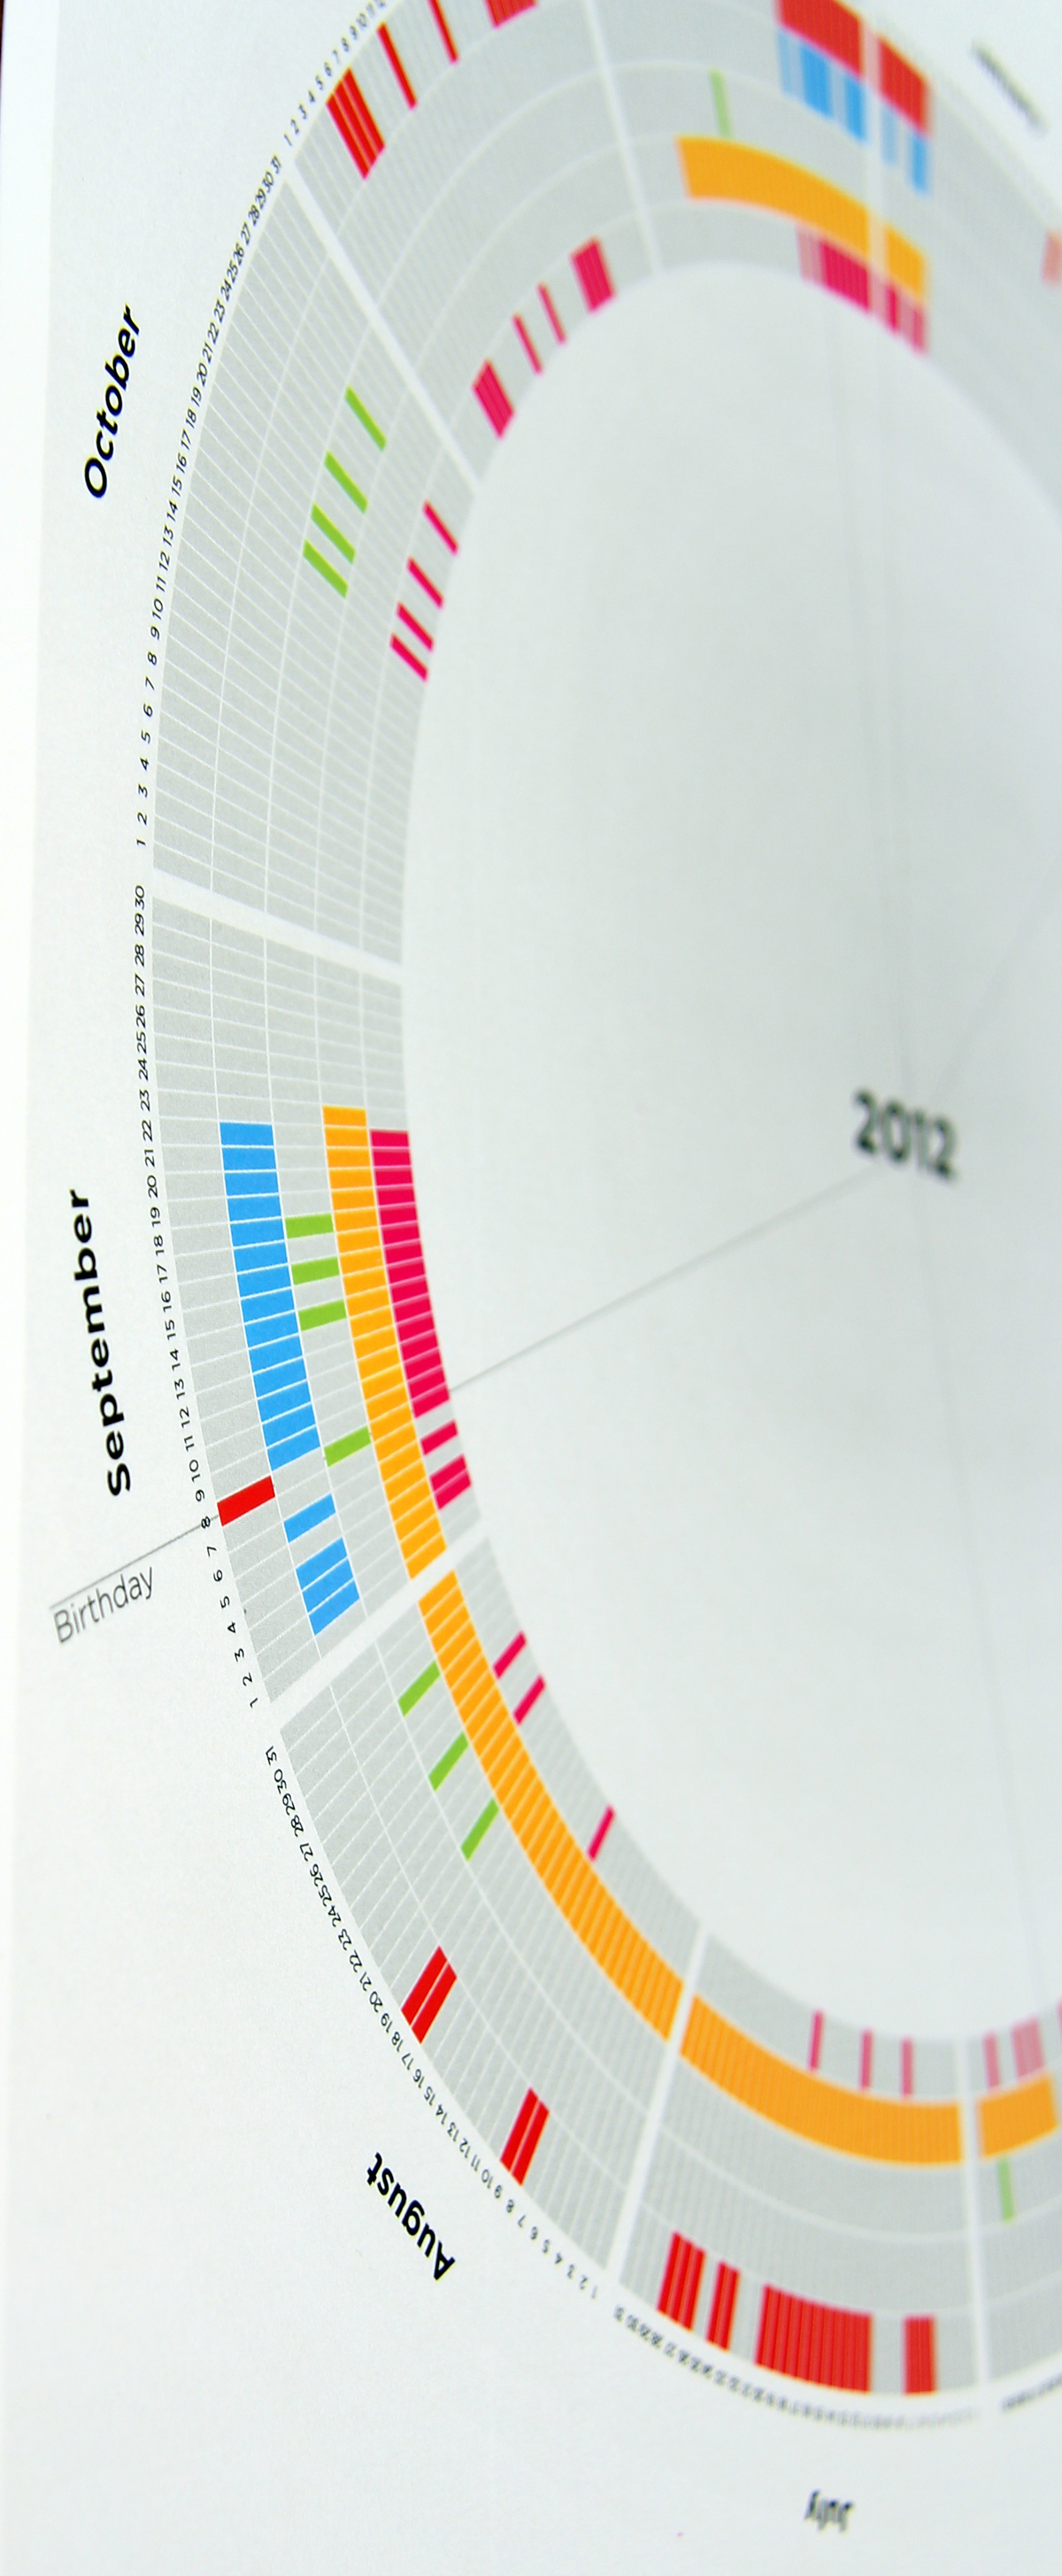 infographic data visualization calendar carlos palma LCC london college of communication personal Resume CV portfolio